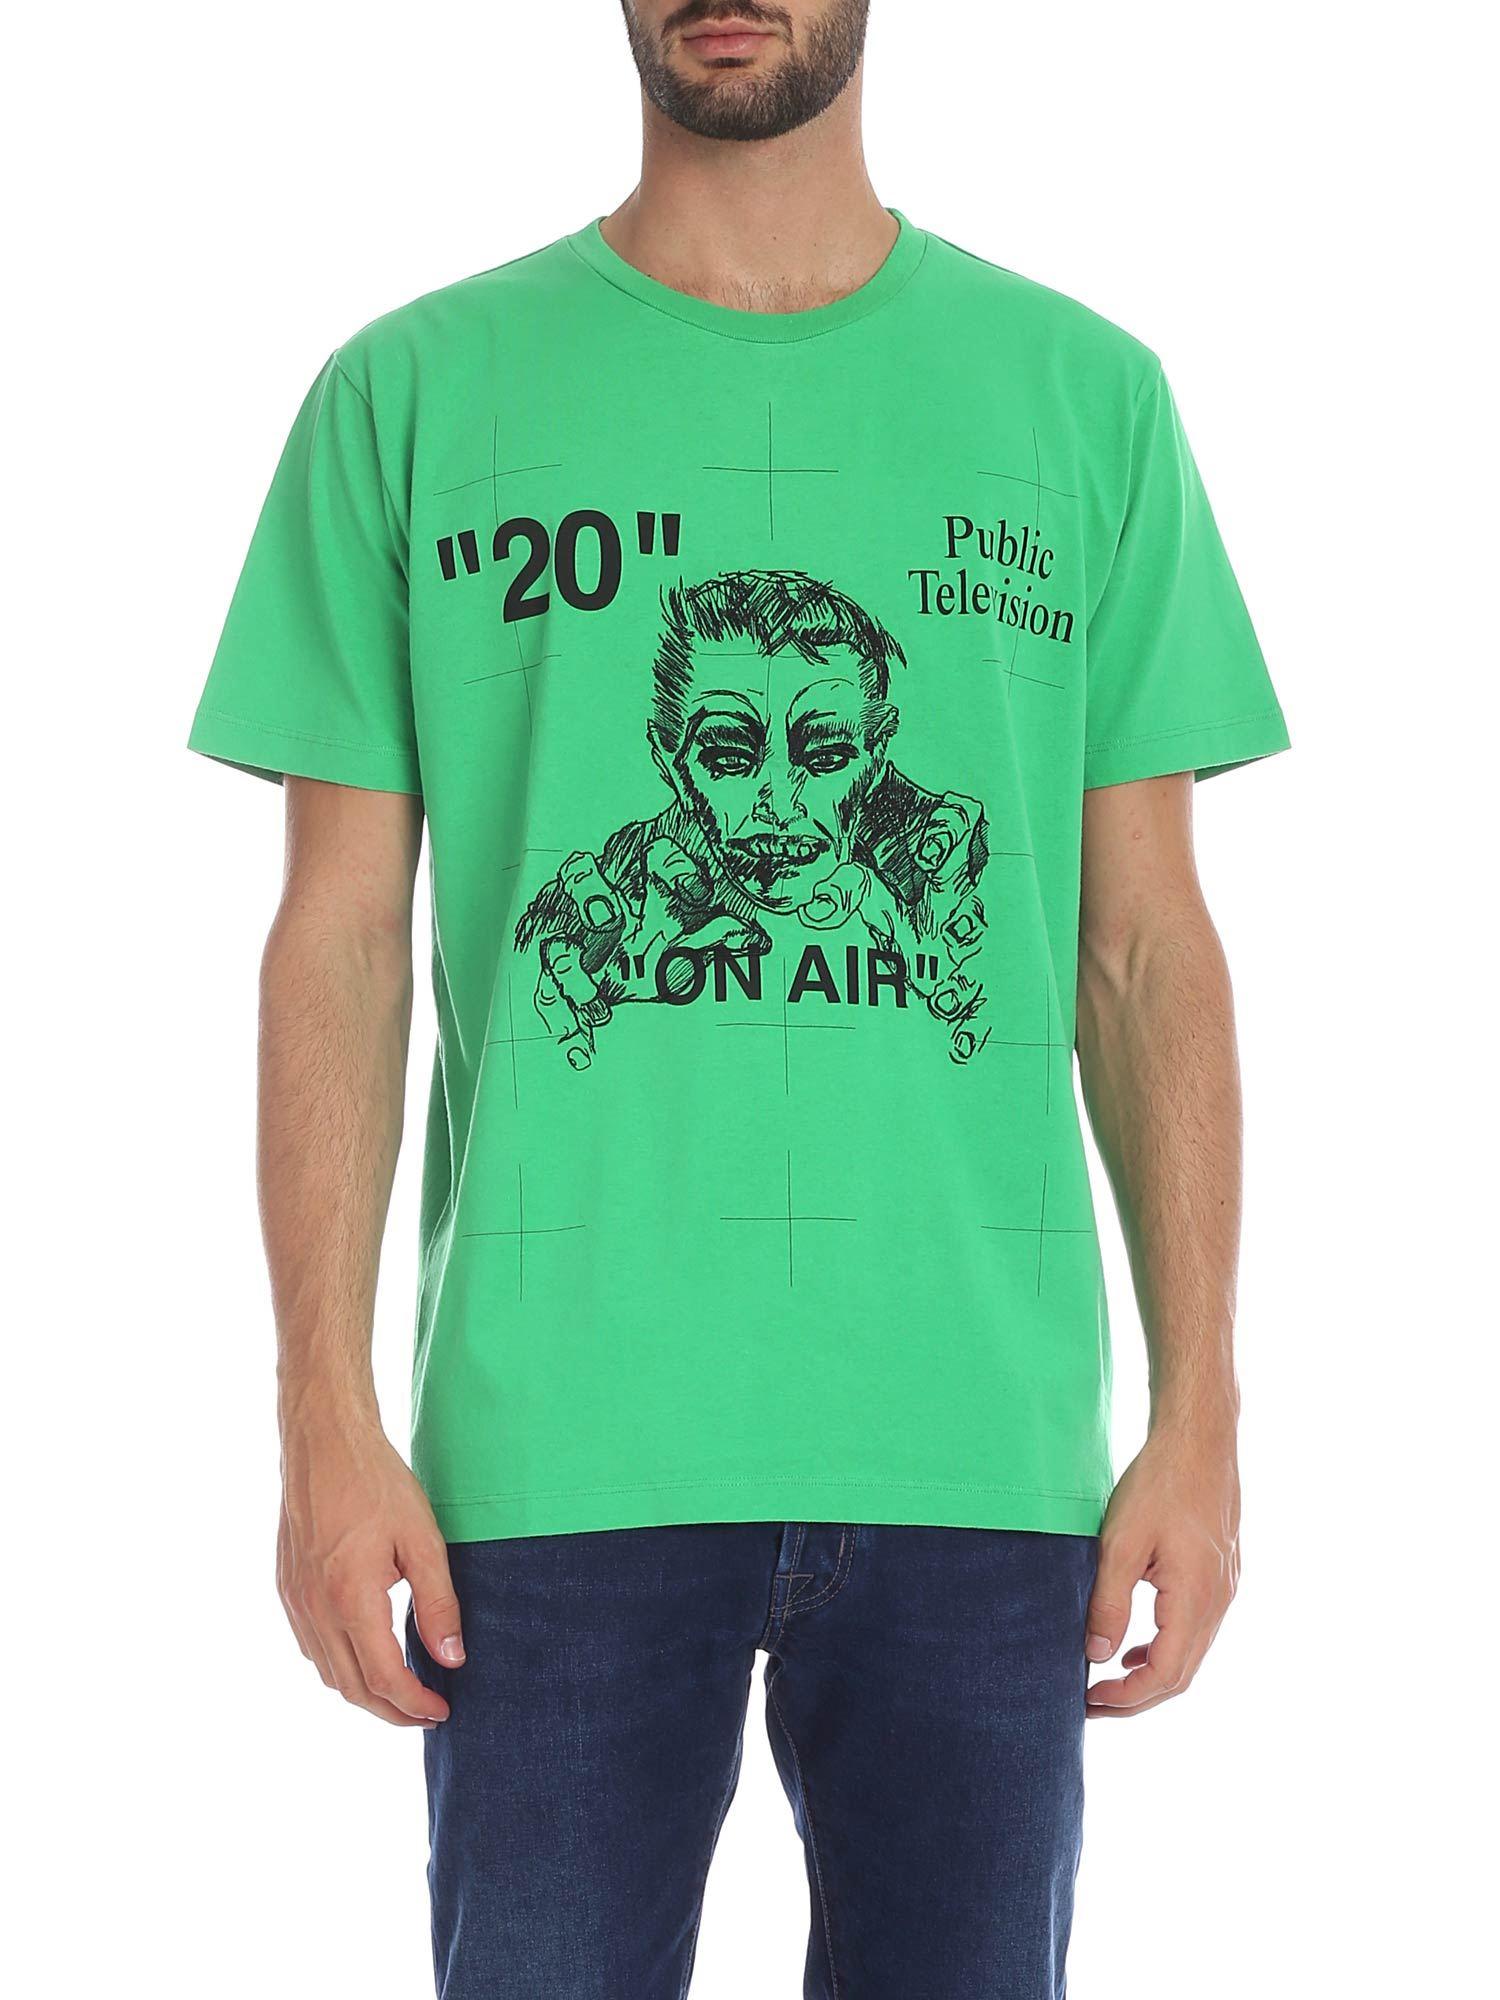 Off-White c/o Virgil Abloh Cotton Mirko Artist Crewneck T-shirt In Green in White for Men - Lyst